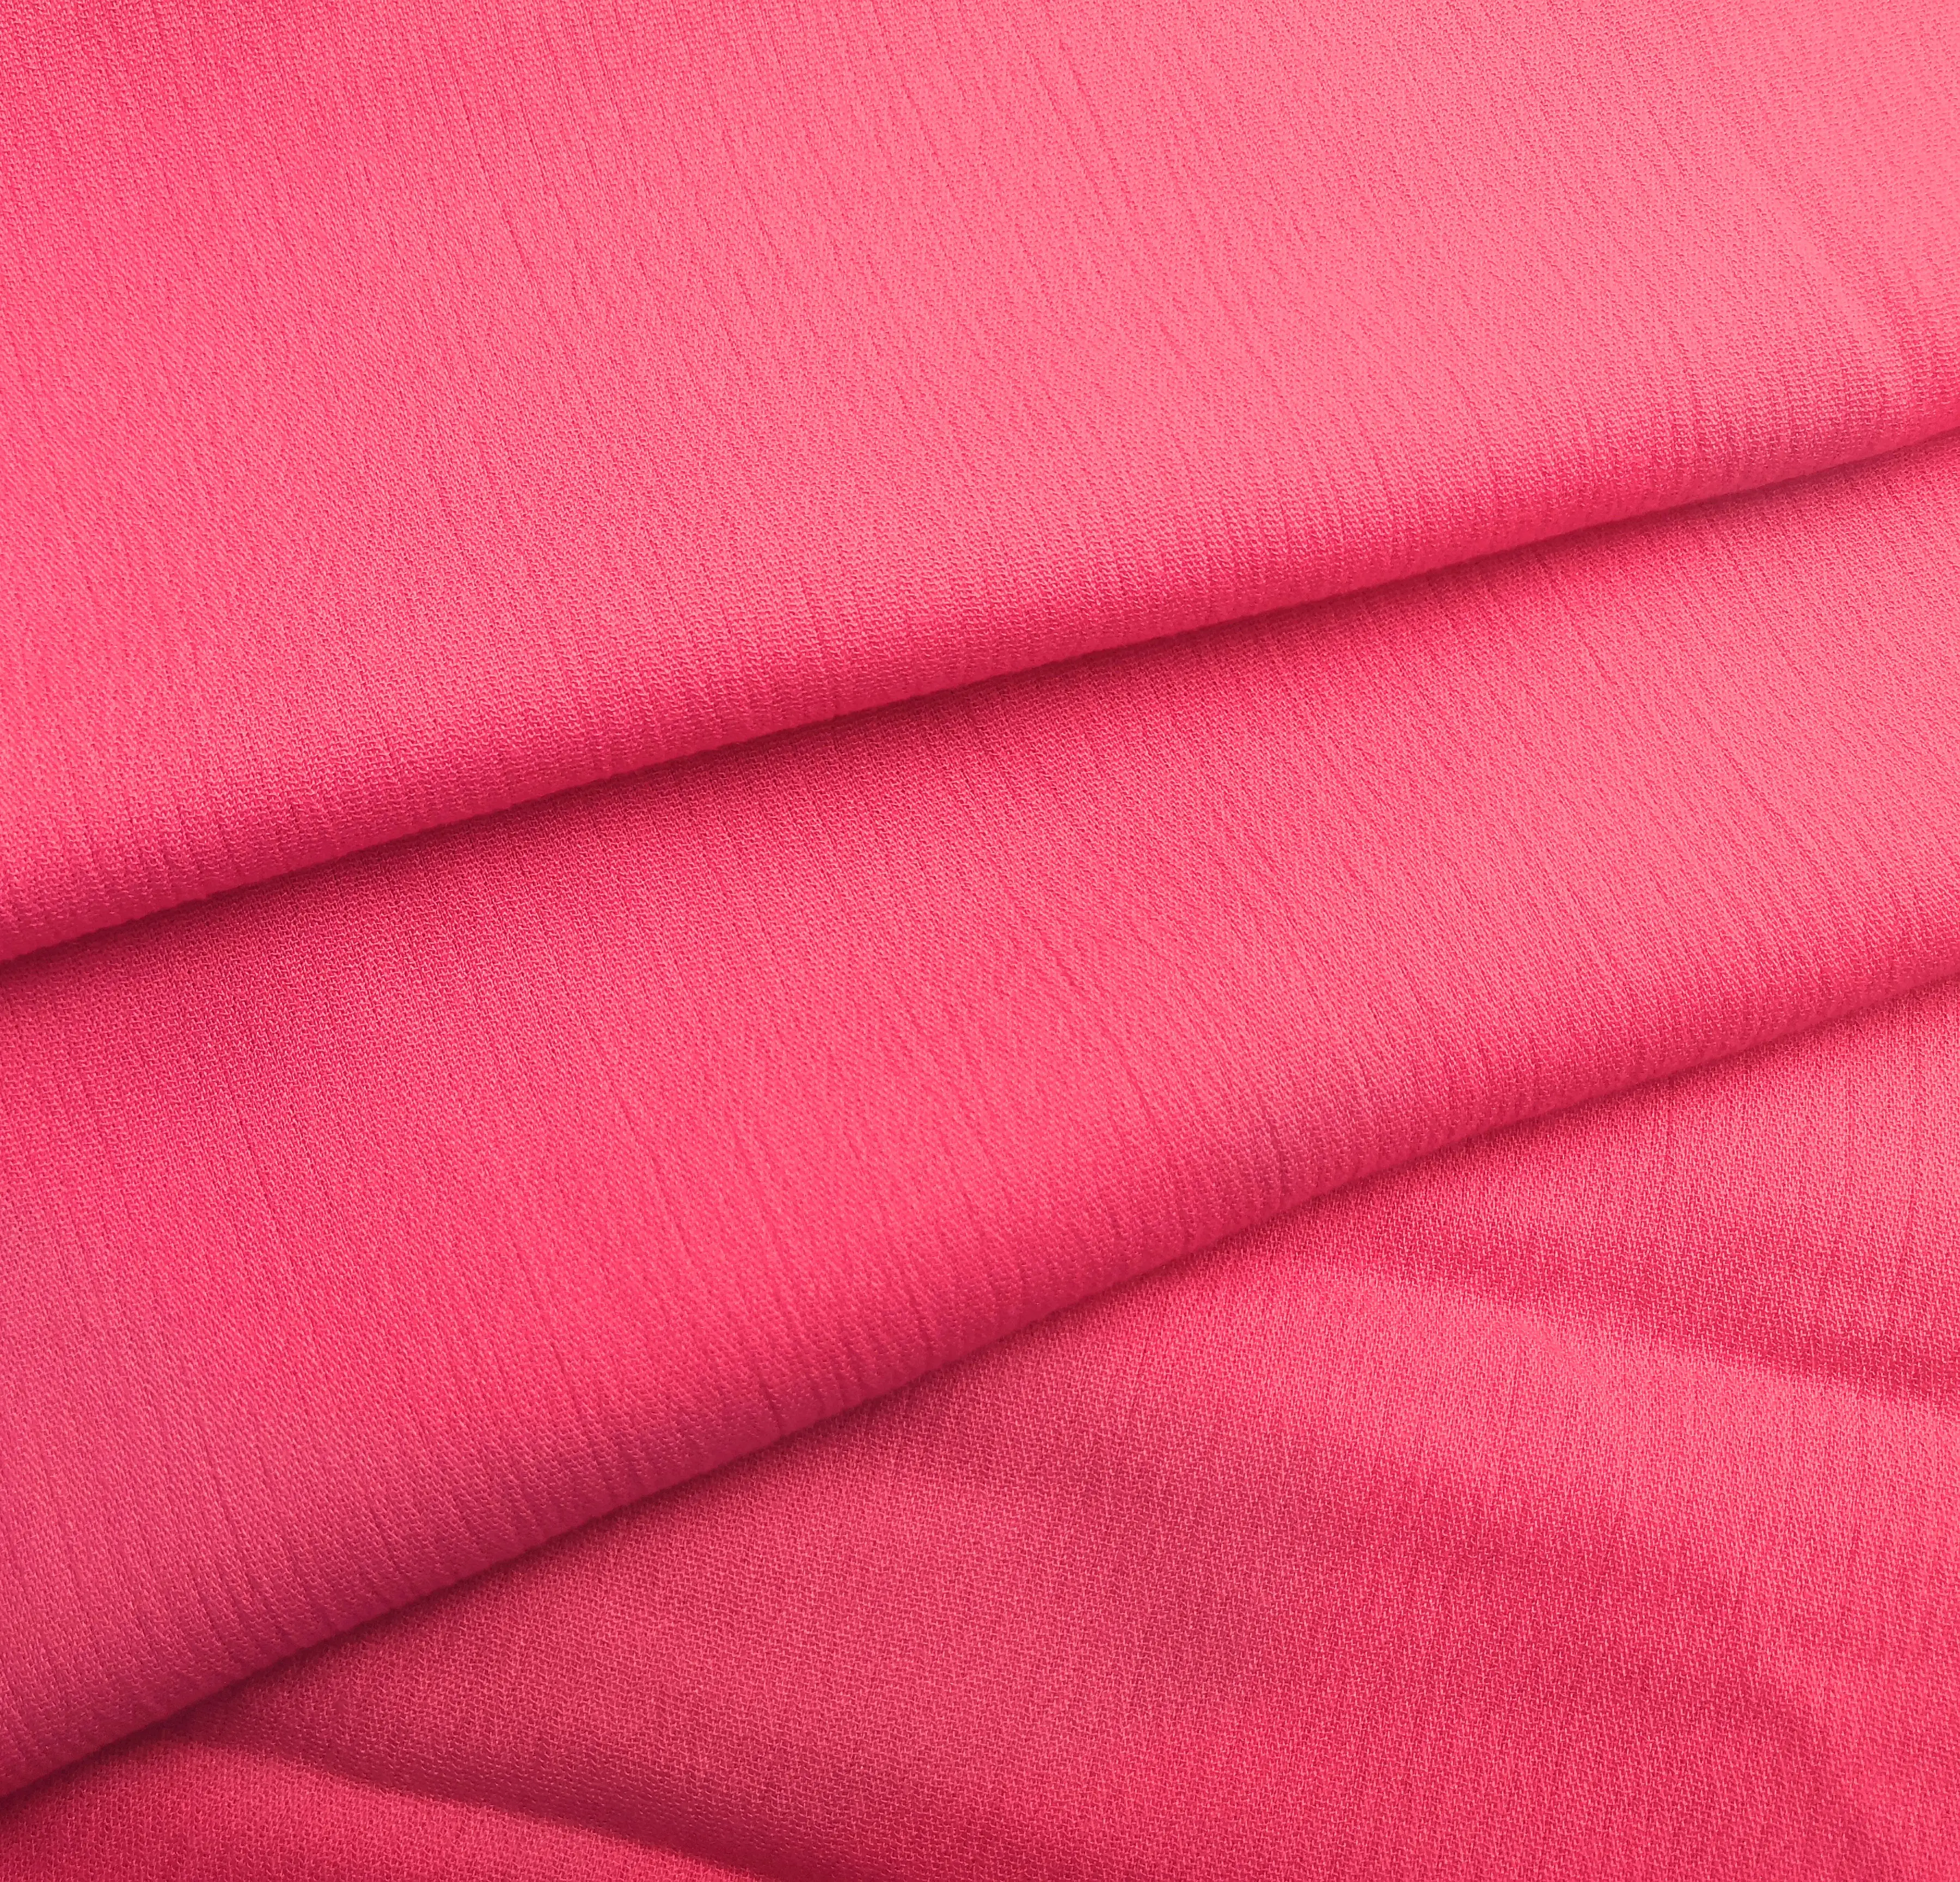 Lightweight Garment Soft Fashion Crepon Printed 100%rayon Fabric